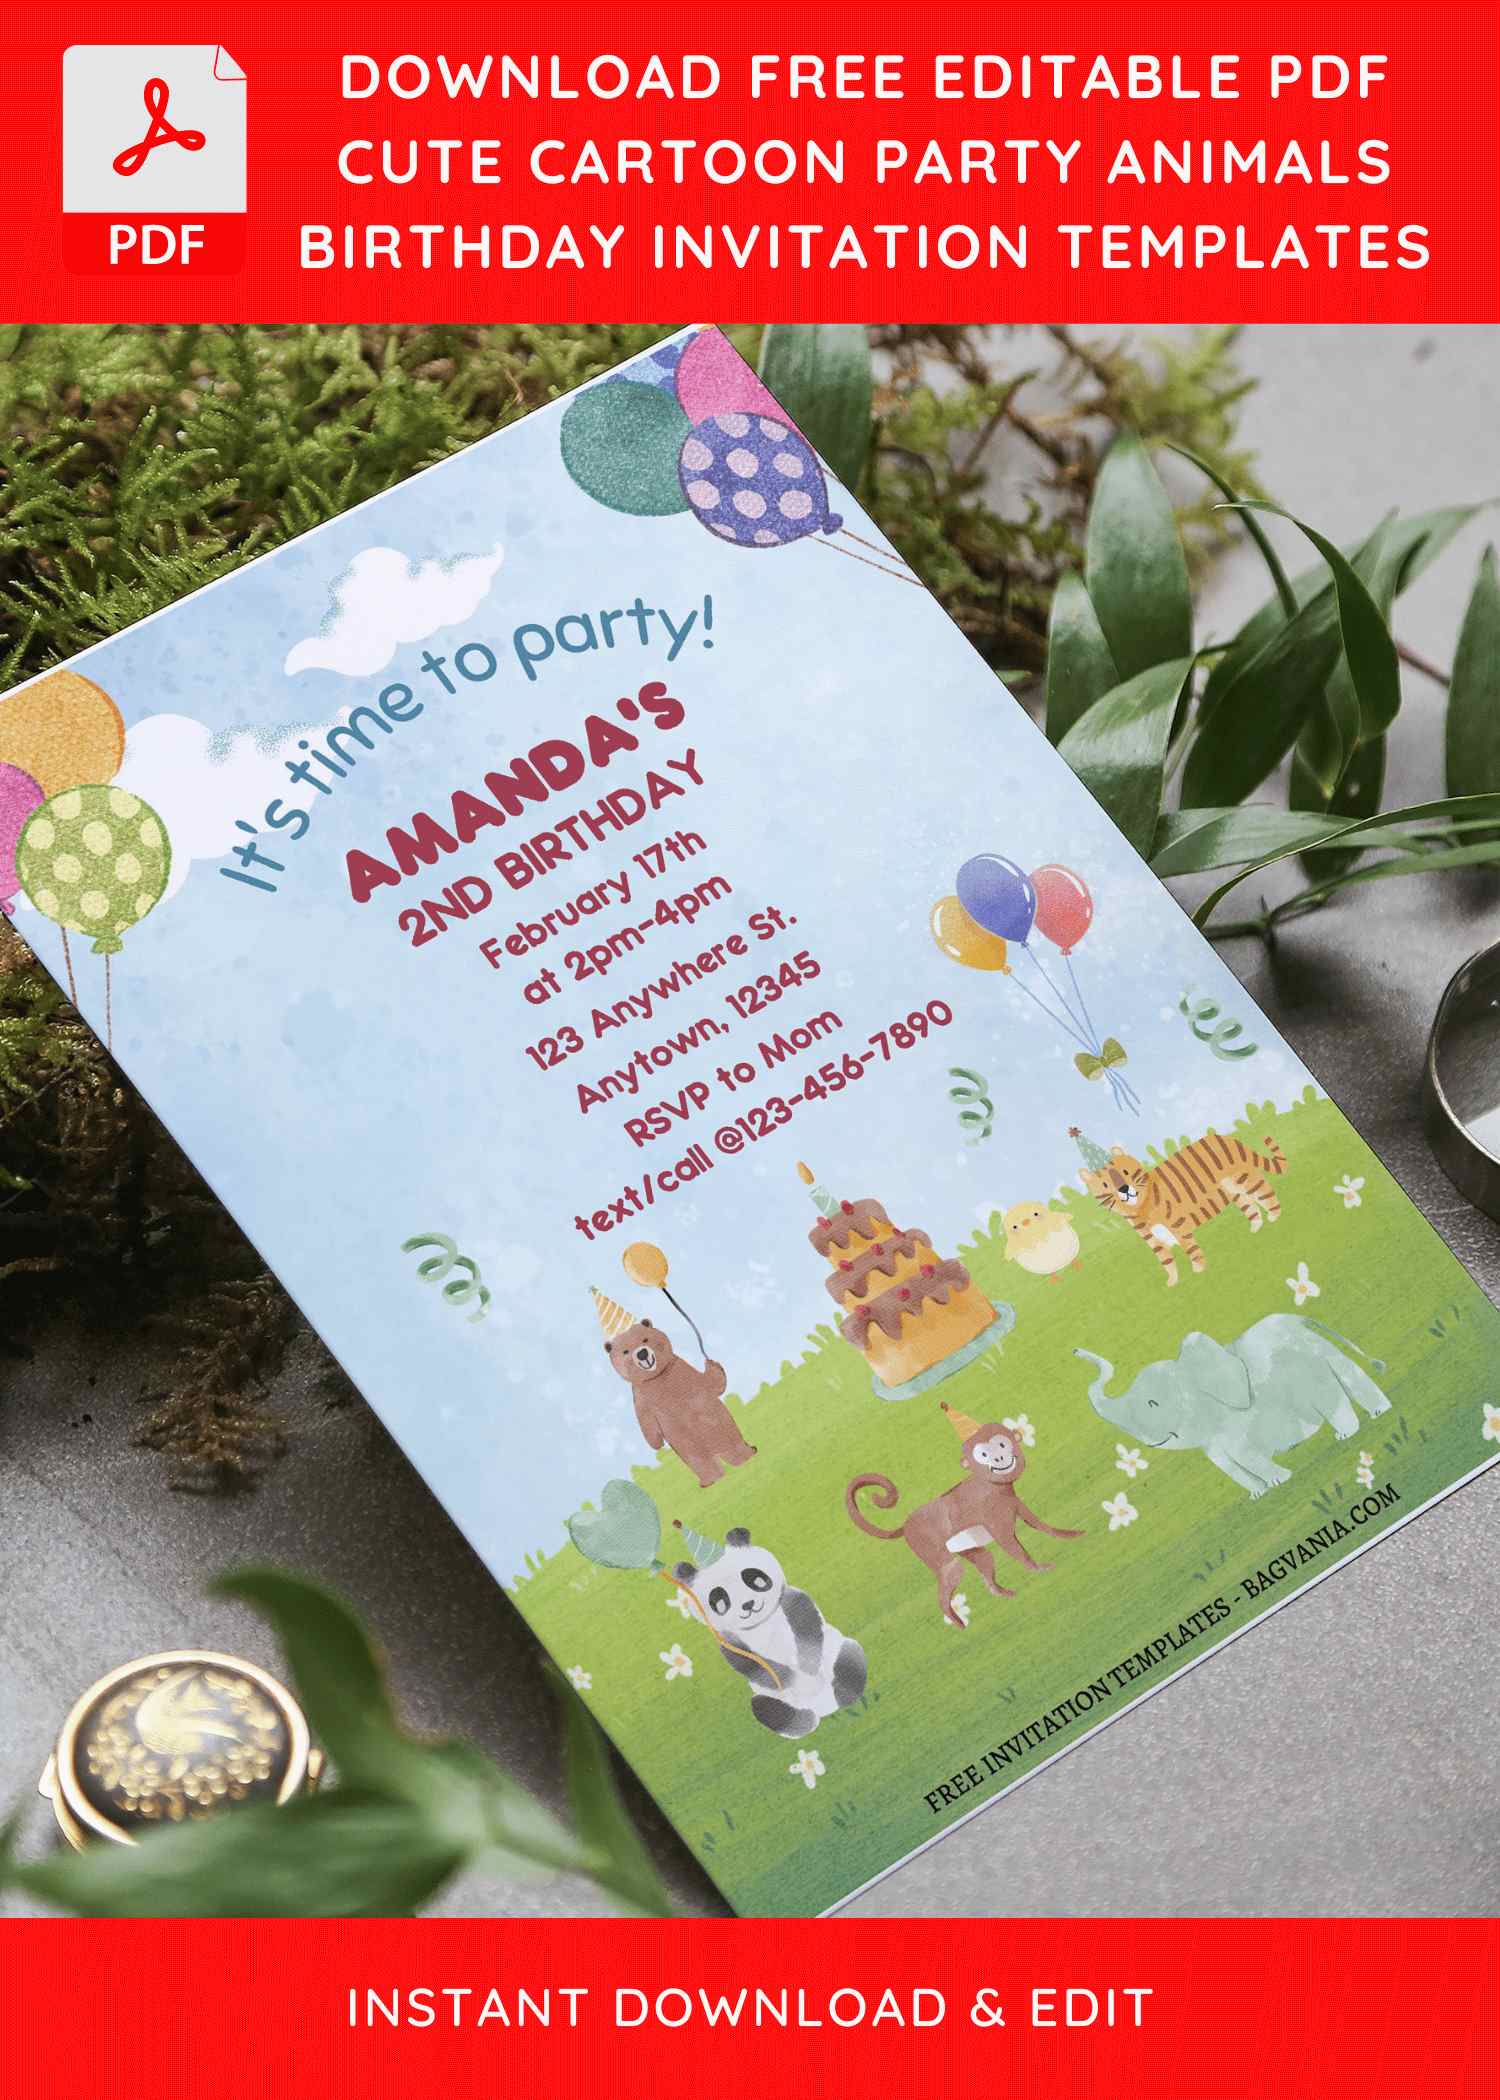 Free Editable PDF) Cheerful Party Animals Birthday Invitation Templates |  FREE Printable Birthday Invitation Templates - Bagvania